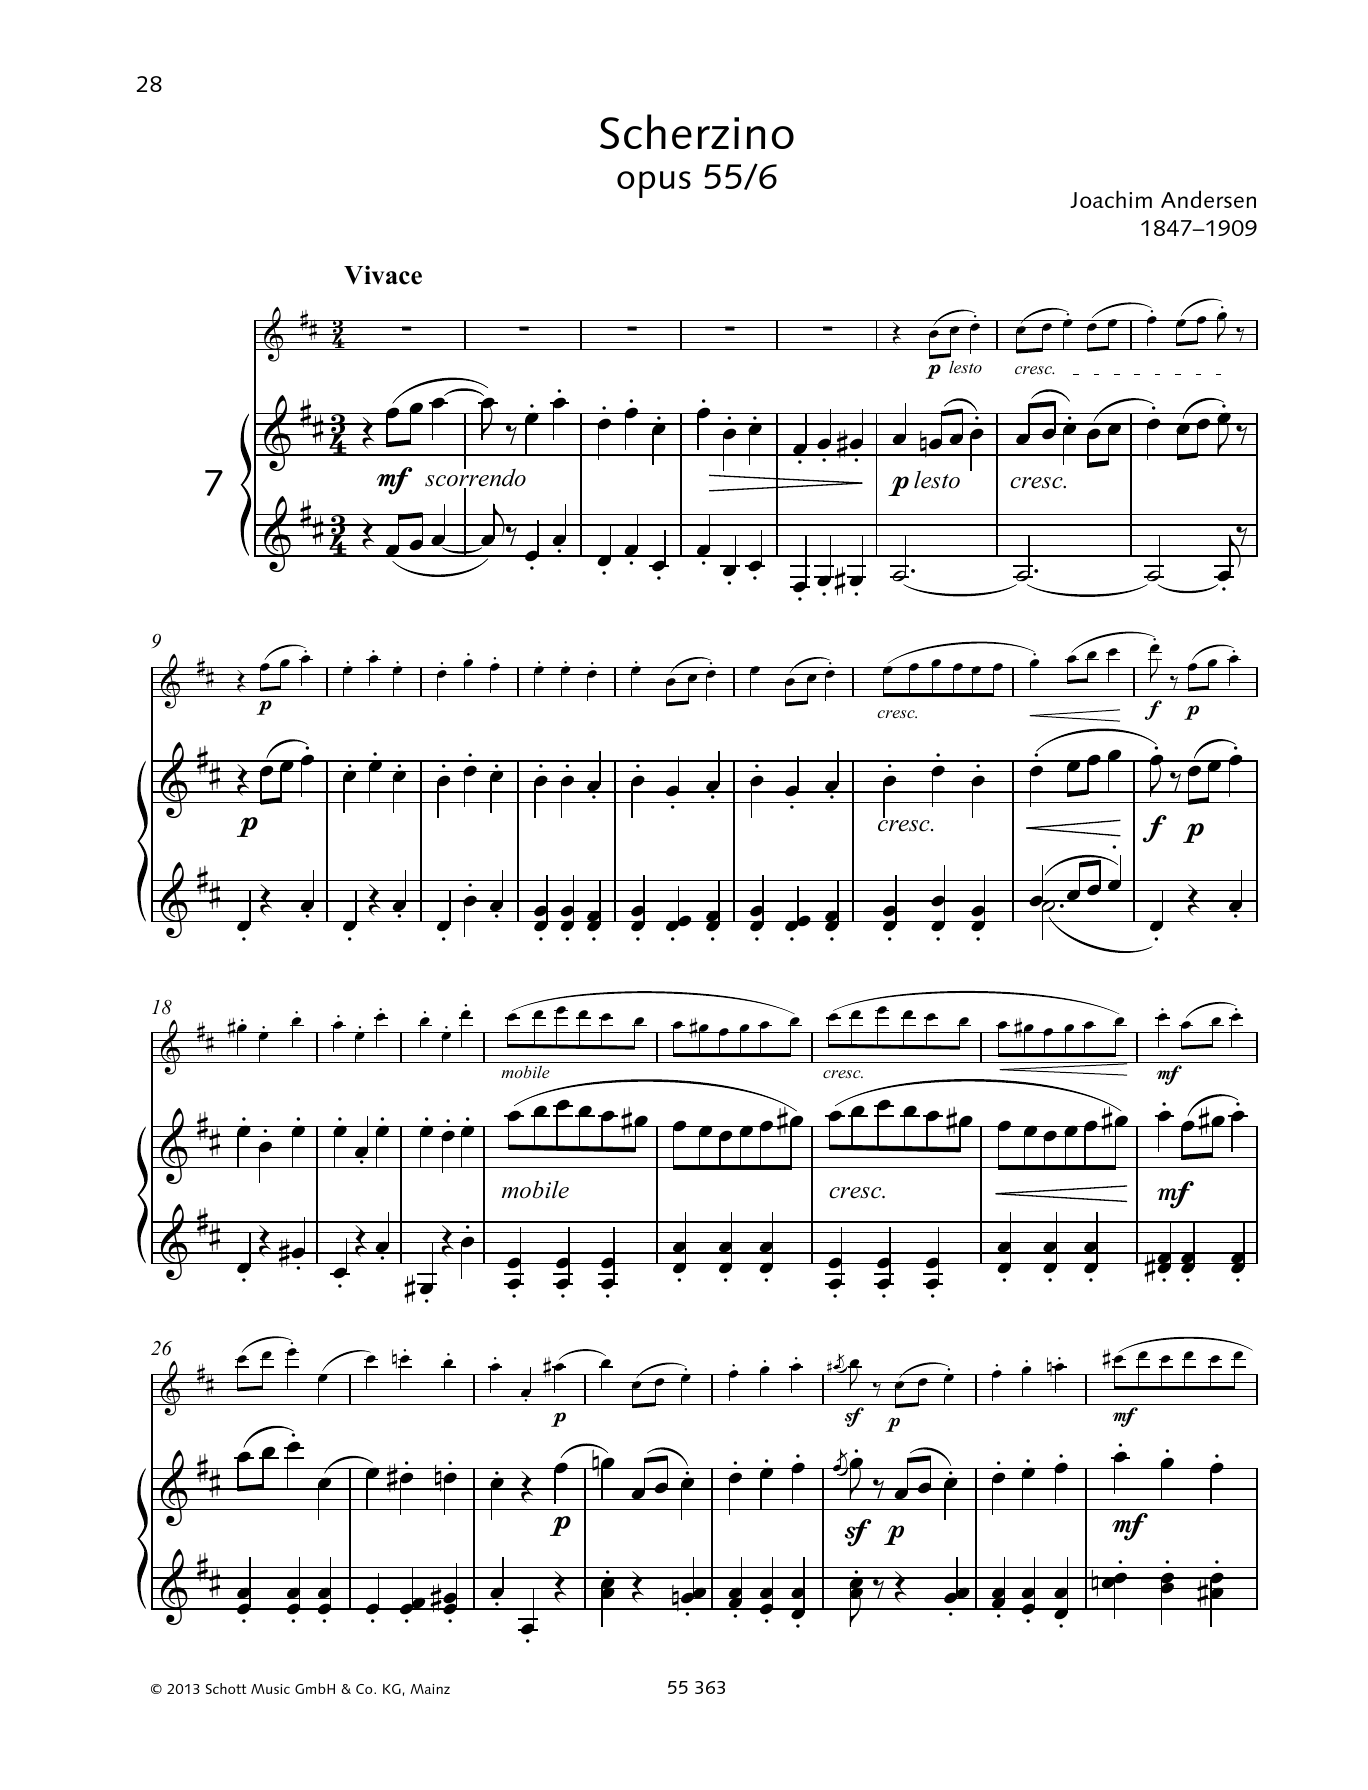 Download Joachim Andersen Scherzino Sheet Music and learn how to play Woodwind Solo PDF digital score in minutes